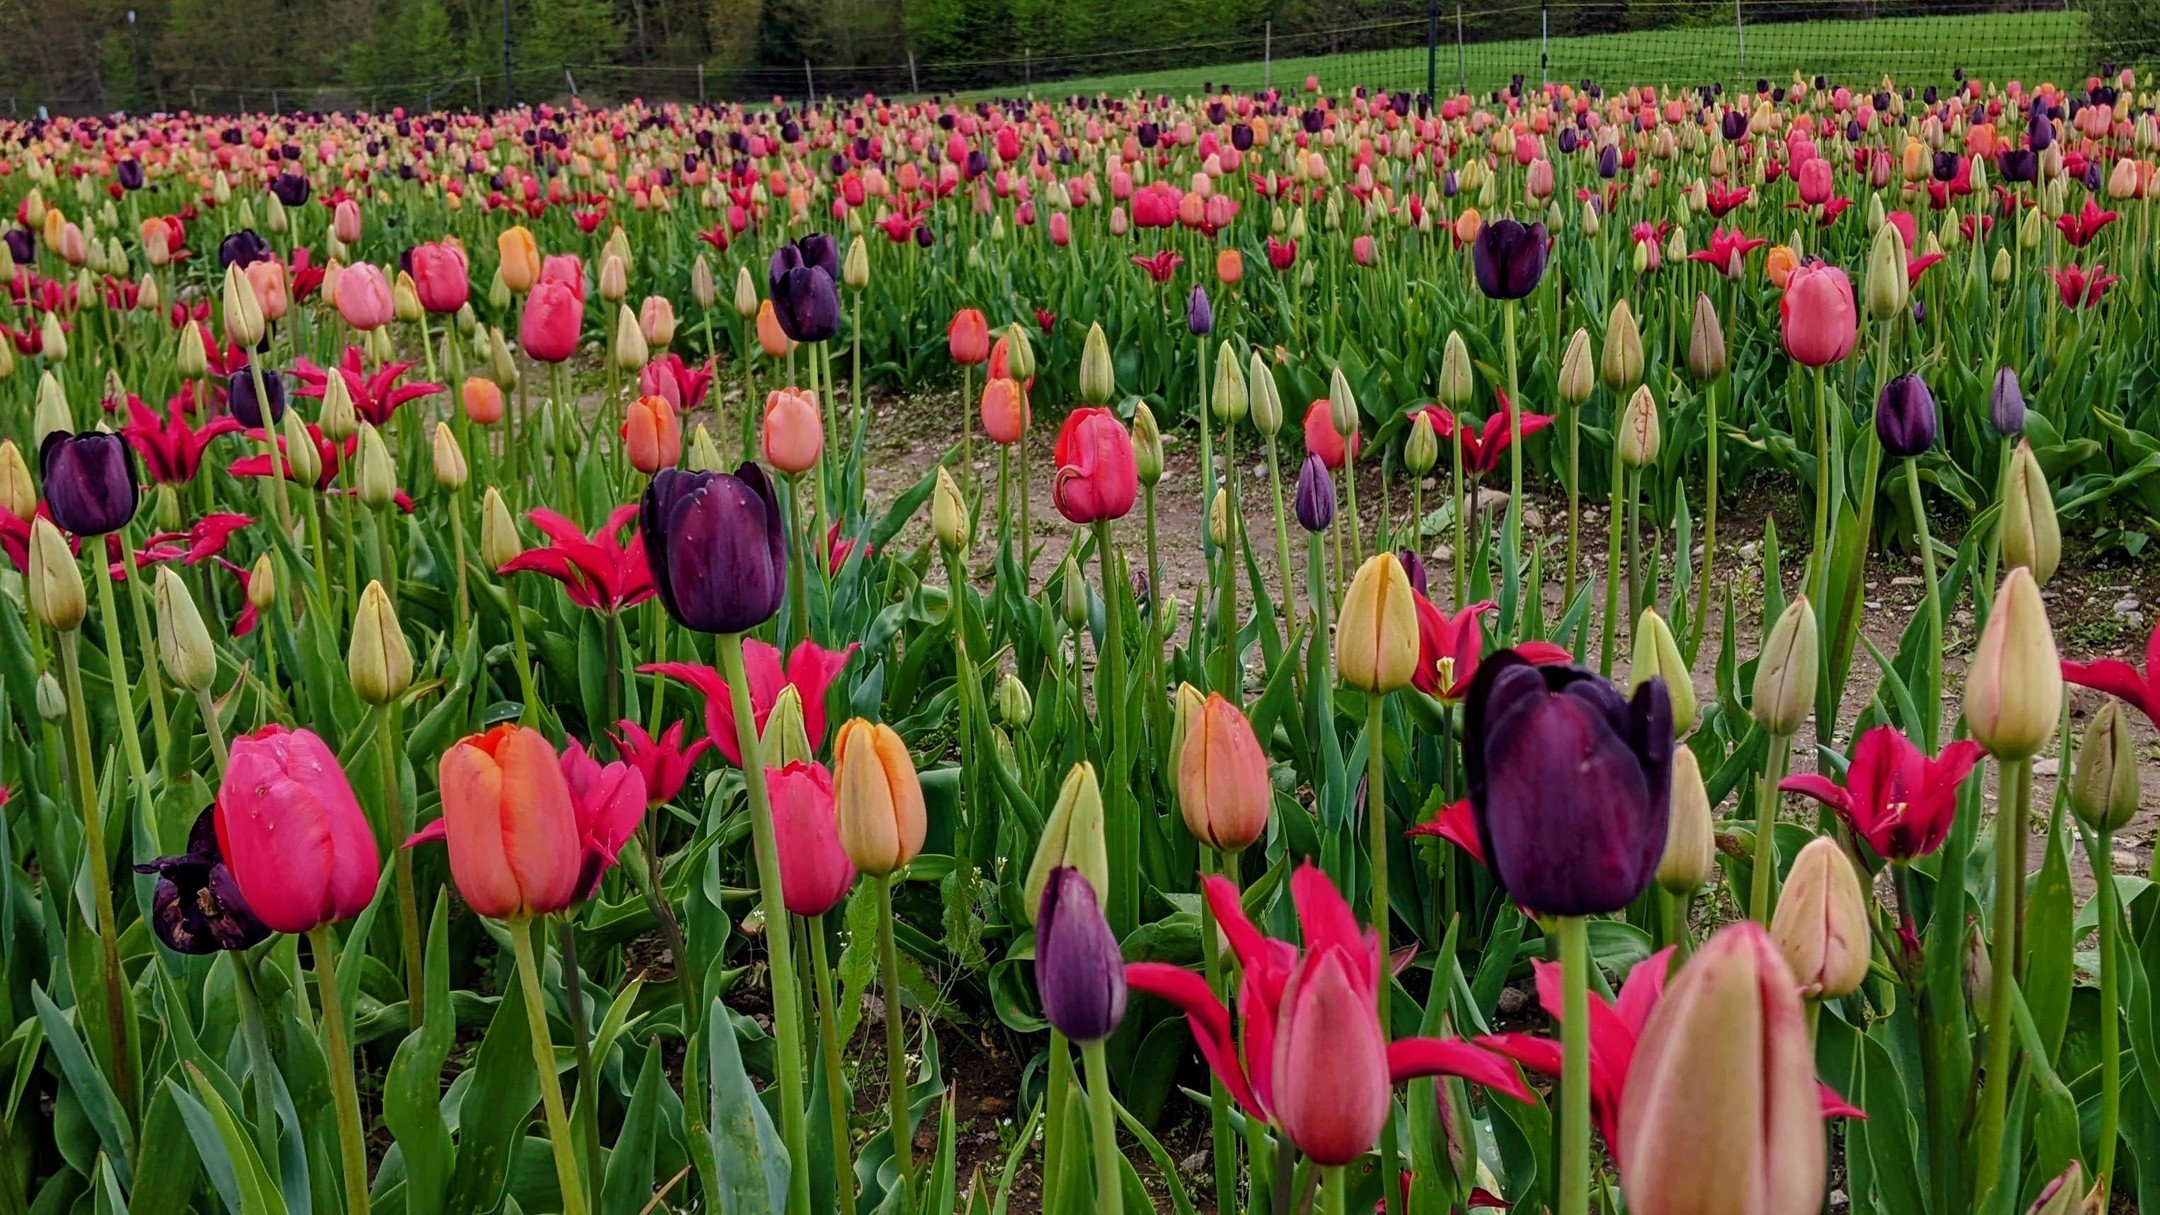 Even a florist can't resist buying herself tulips at Wicked Tulip Farm.
#tulipfarm #petallionfloral #JohnstonRI #TulipsinMay #petallion.com